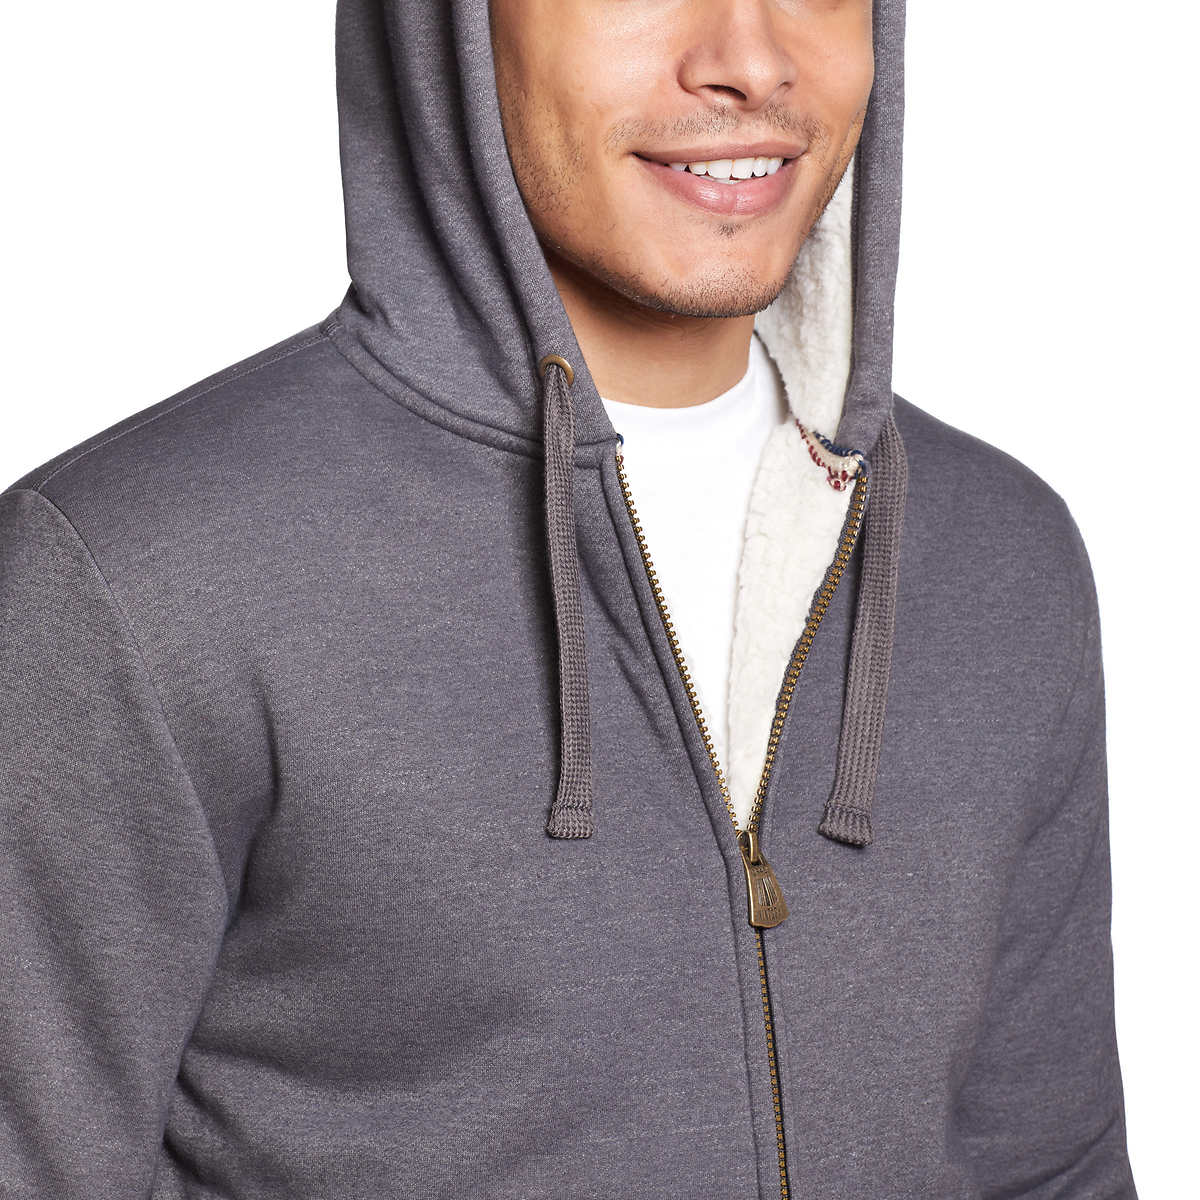 Costco hoodies FTW! Hard to pass on price. : r/SeattleKraken